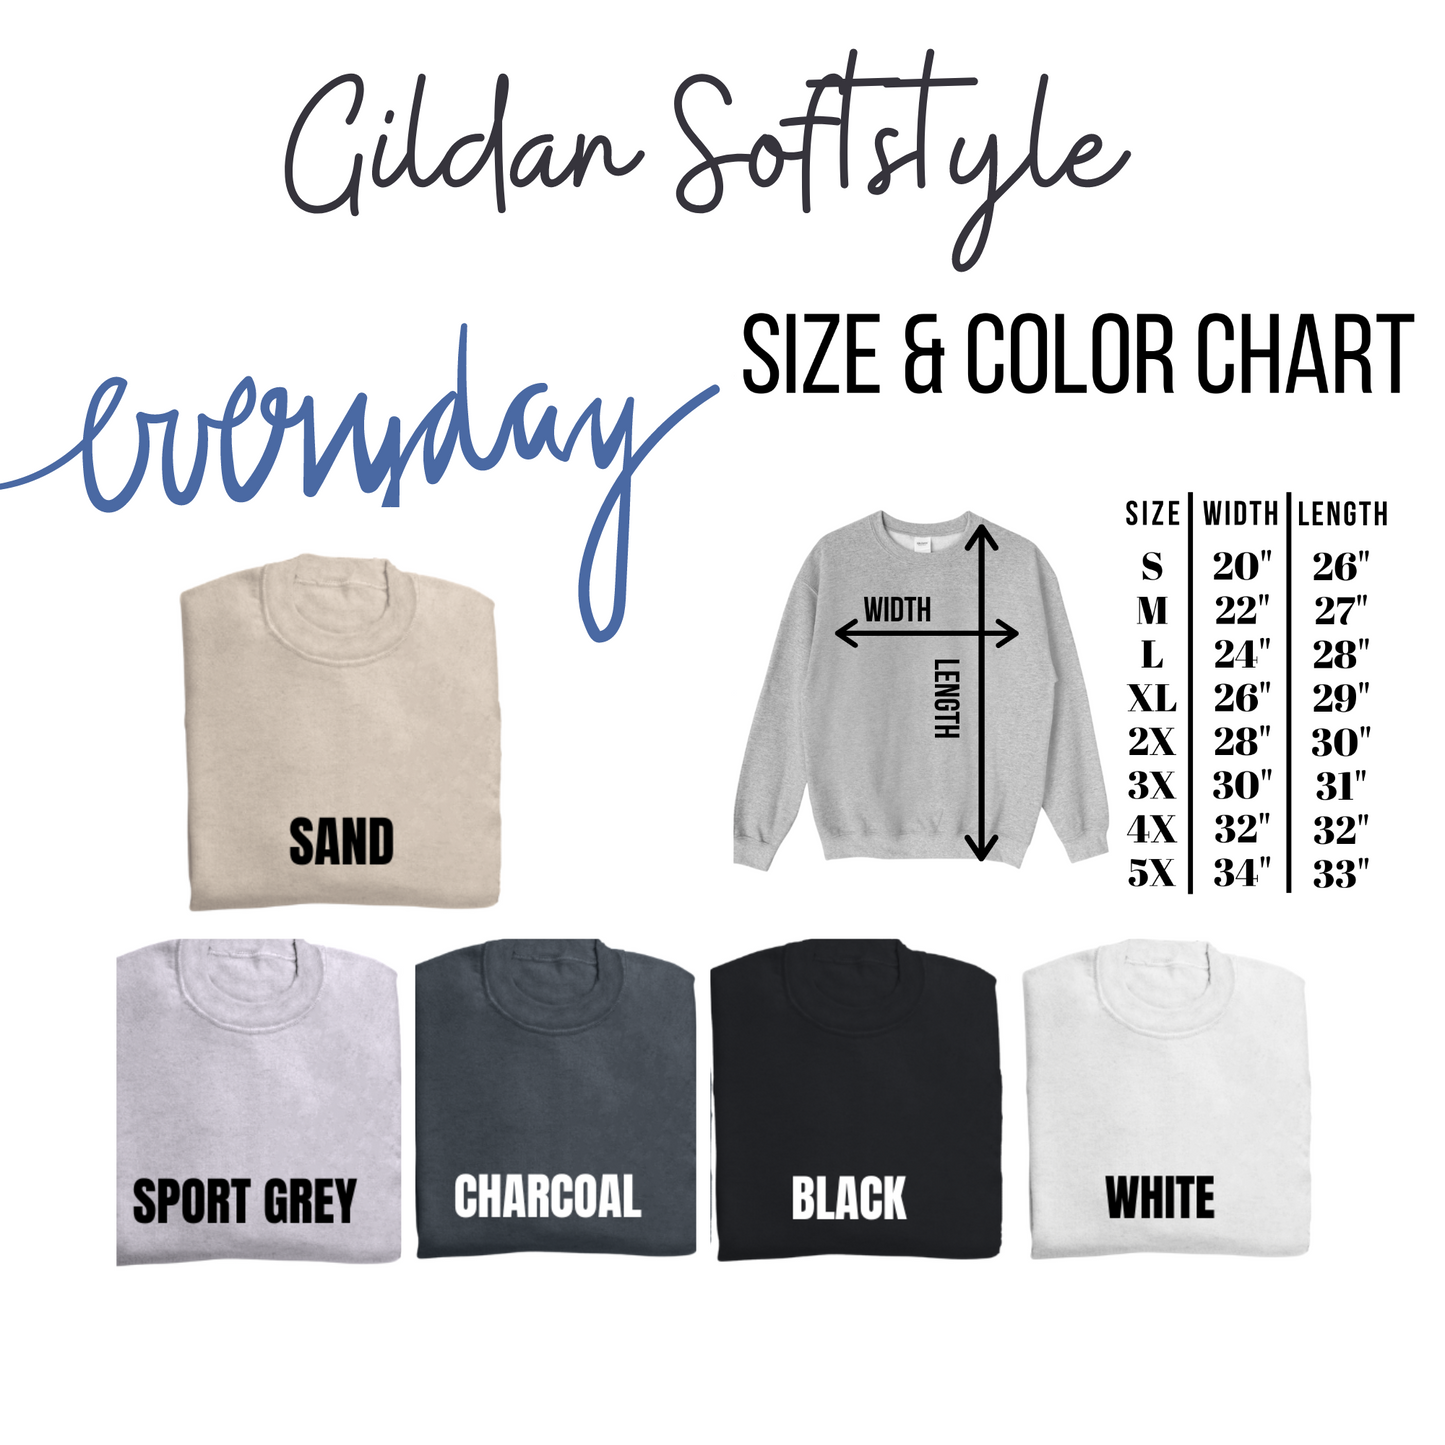 Mustangs Star Stacked Gildan Softstyle Sweatshirt